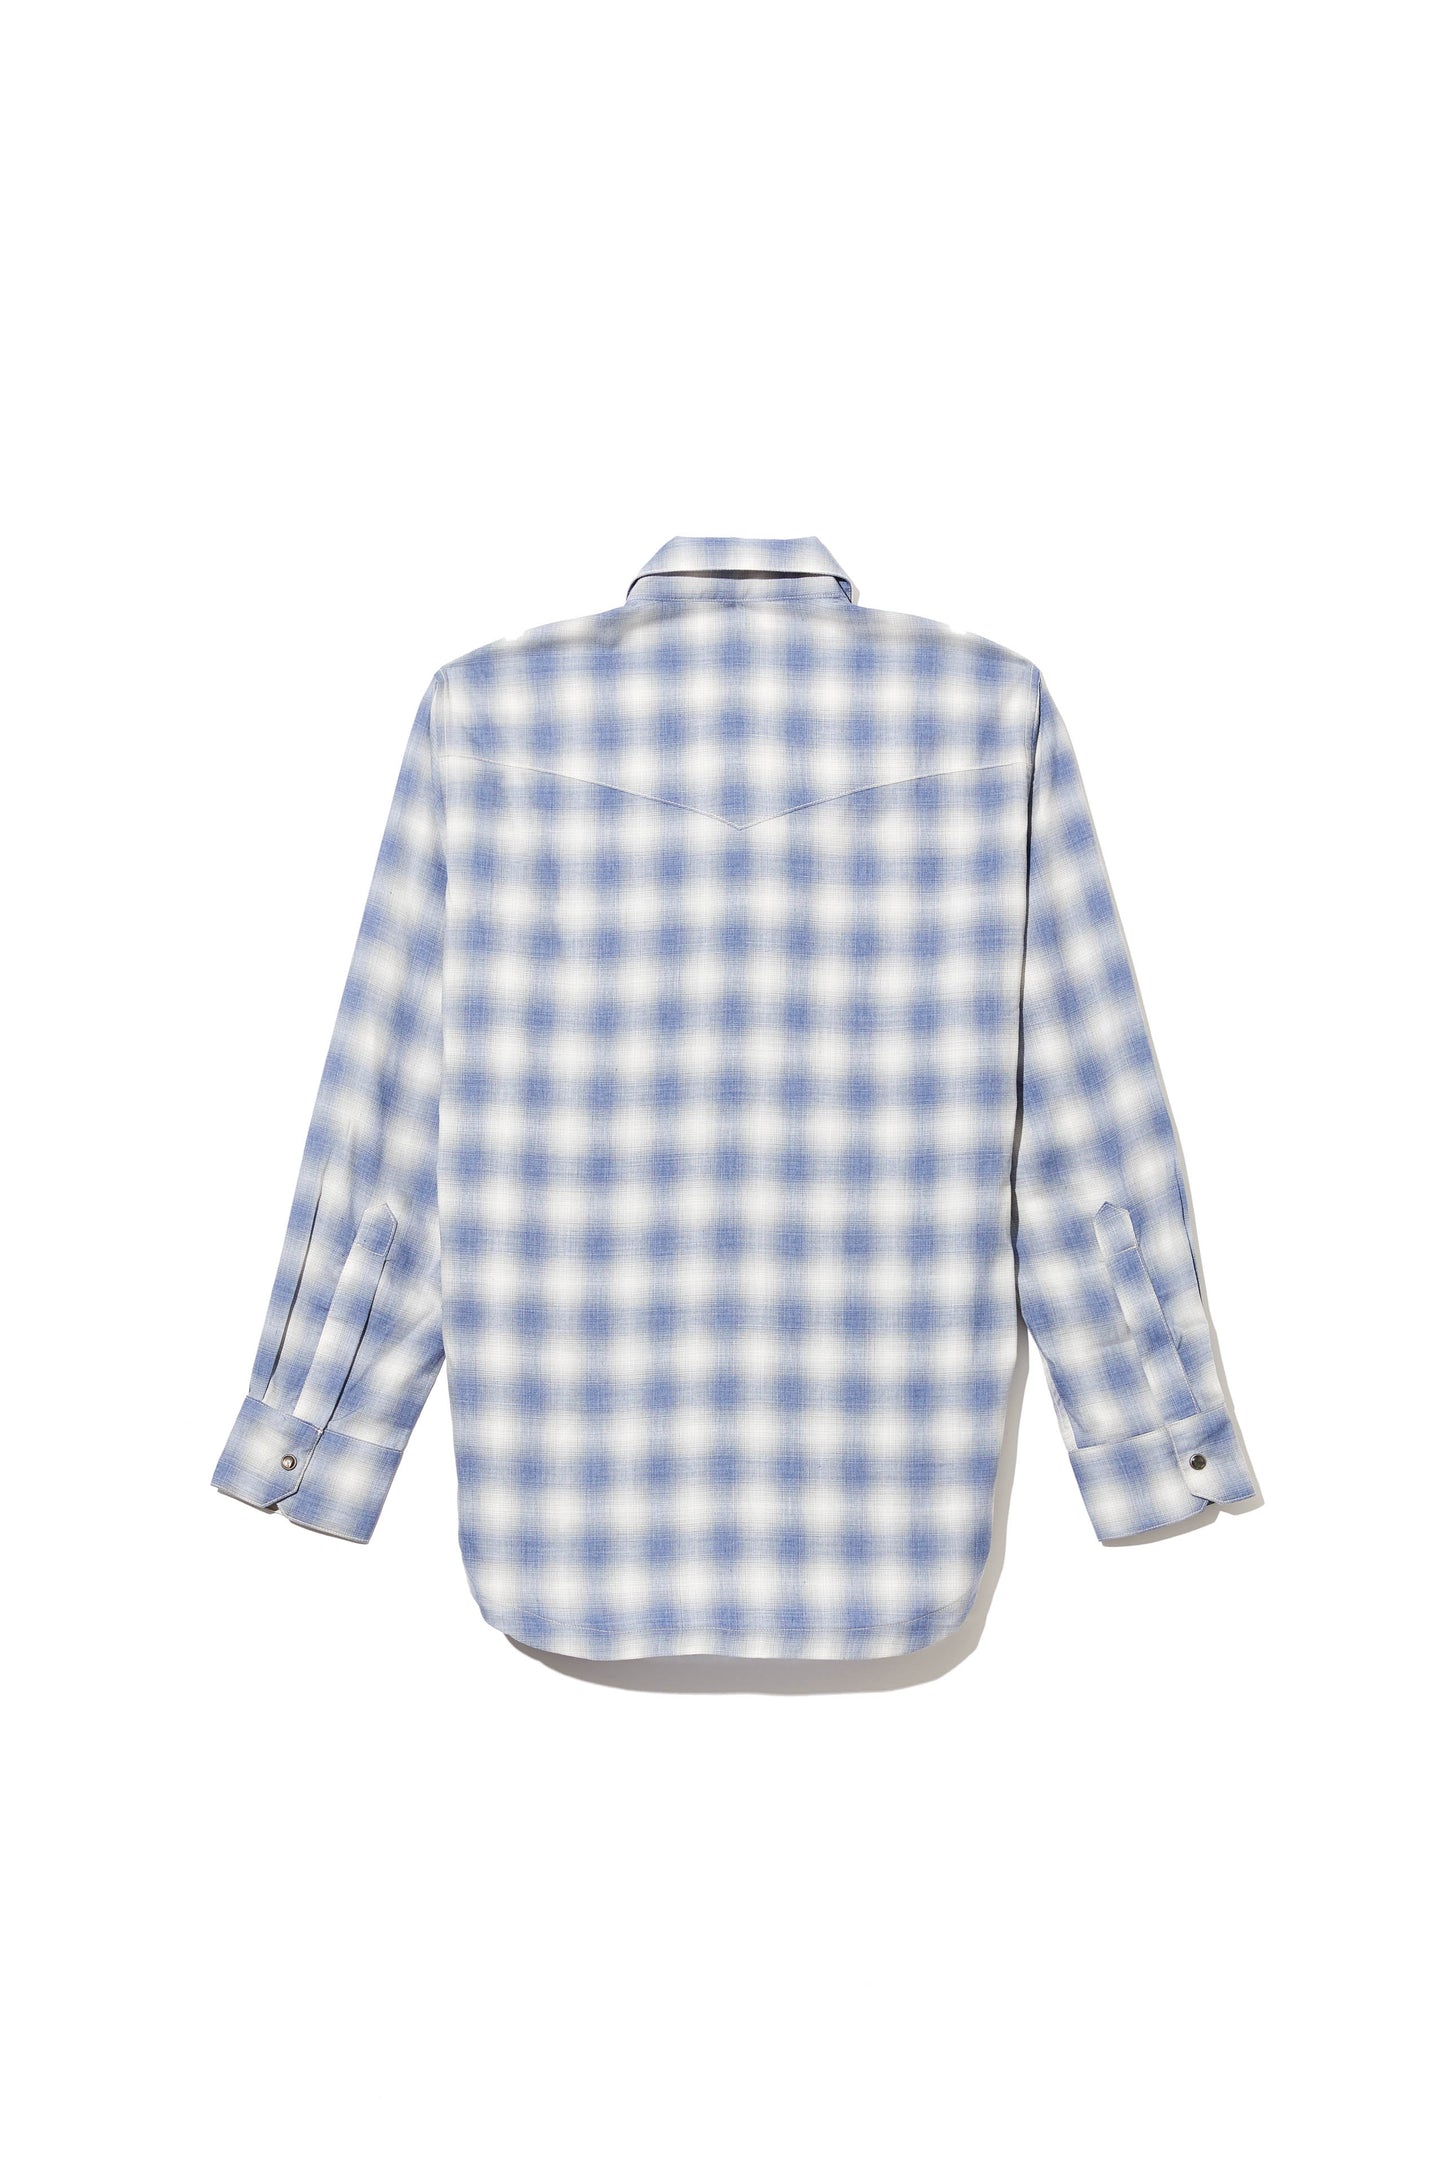 PURPLE BRAND - Men's Shirt - Style No. P301 - The Westwood Blue - Back